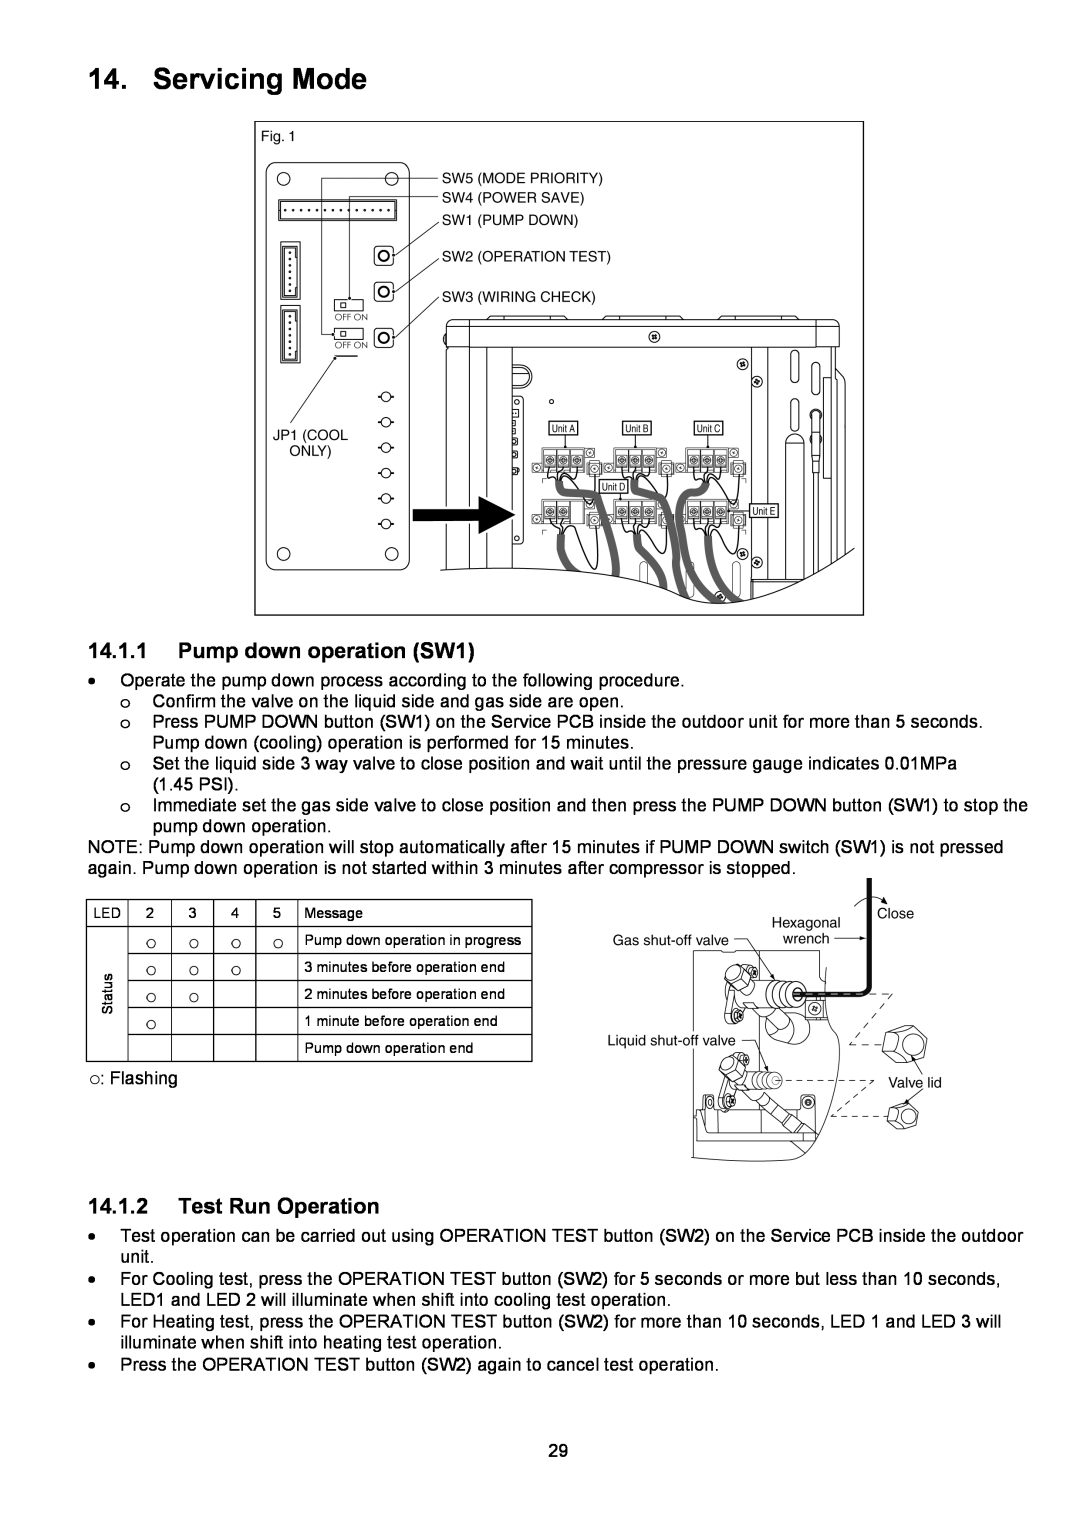 Panasonic CU-5E36QBU service manual Servicing Mode, 14.1.1Pump down operation SW1, 14.1.2Test Run Operation 